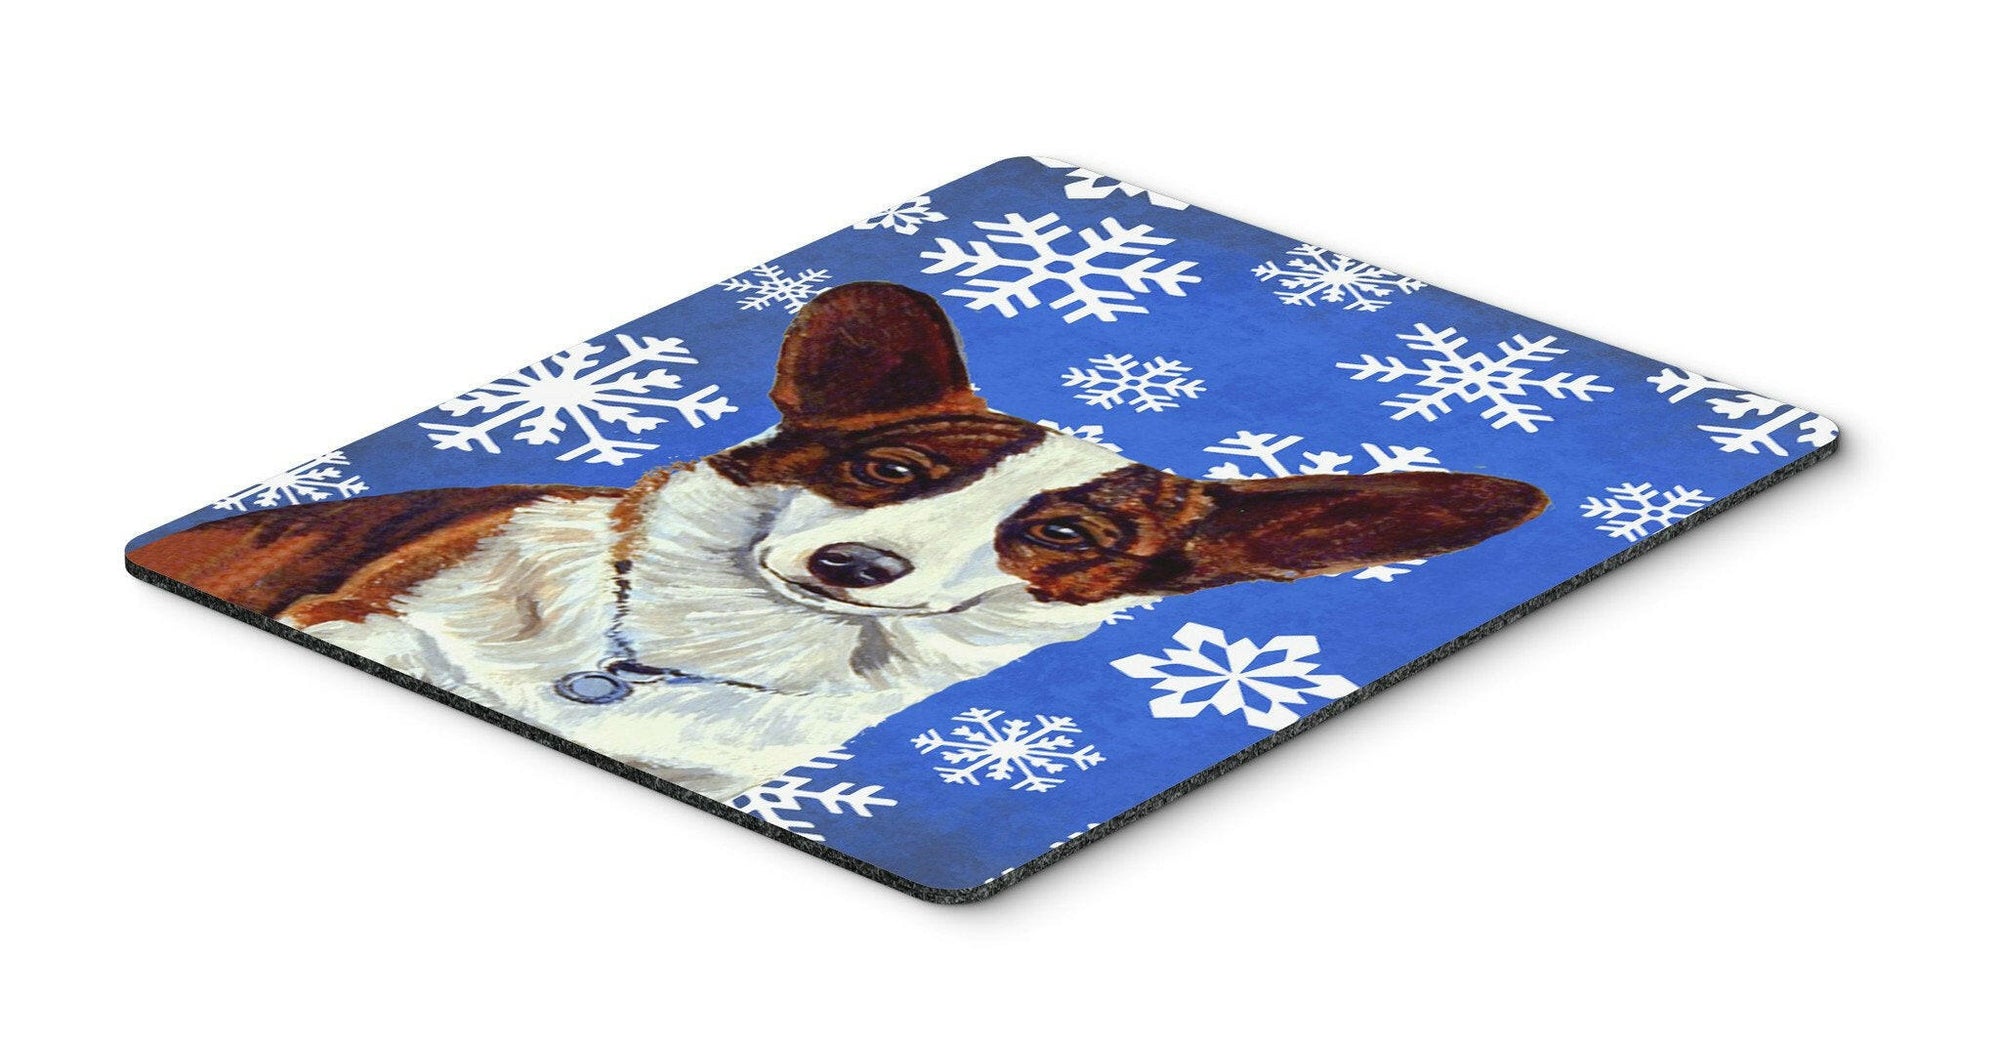 Corgi Winter Snowflakes Holiday Mouse Pad, Hot Pad or Trivet by Caroline's Treasures